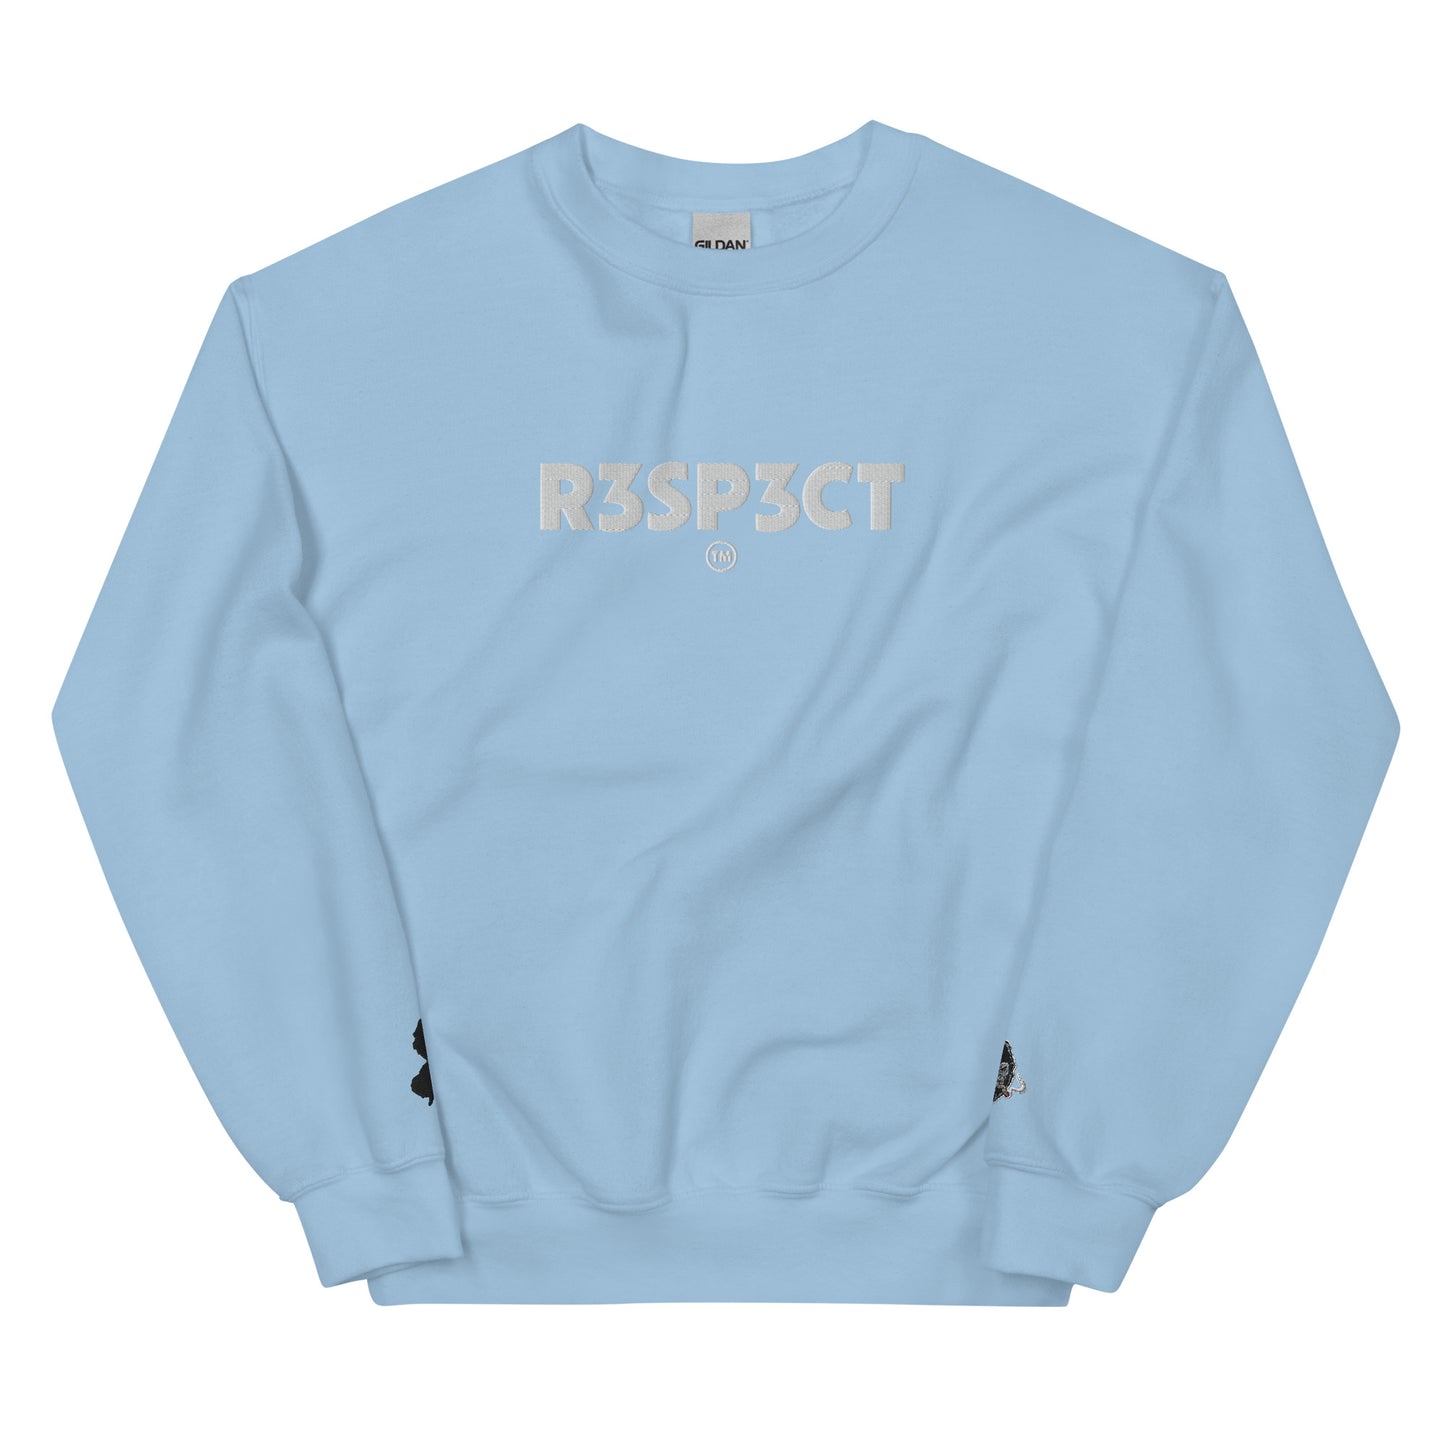 BigSmoke Soprano Clothing: R3SP3CT J3RZ Unisex Sweatshirt